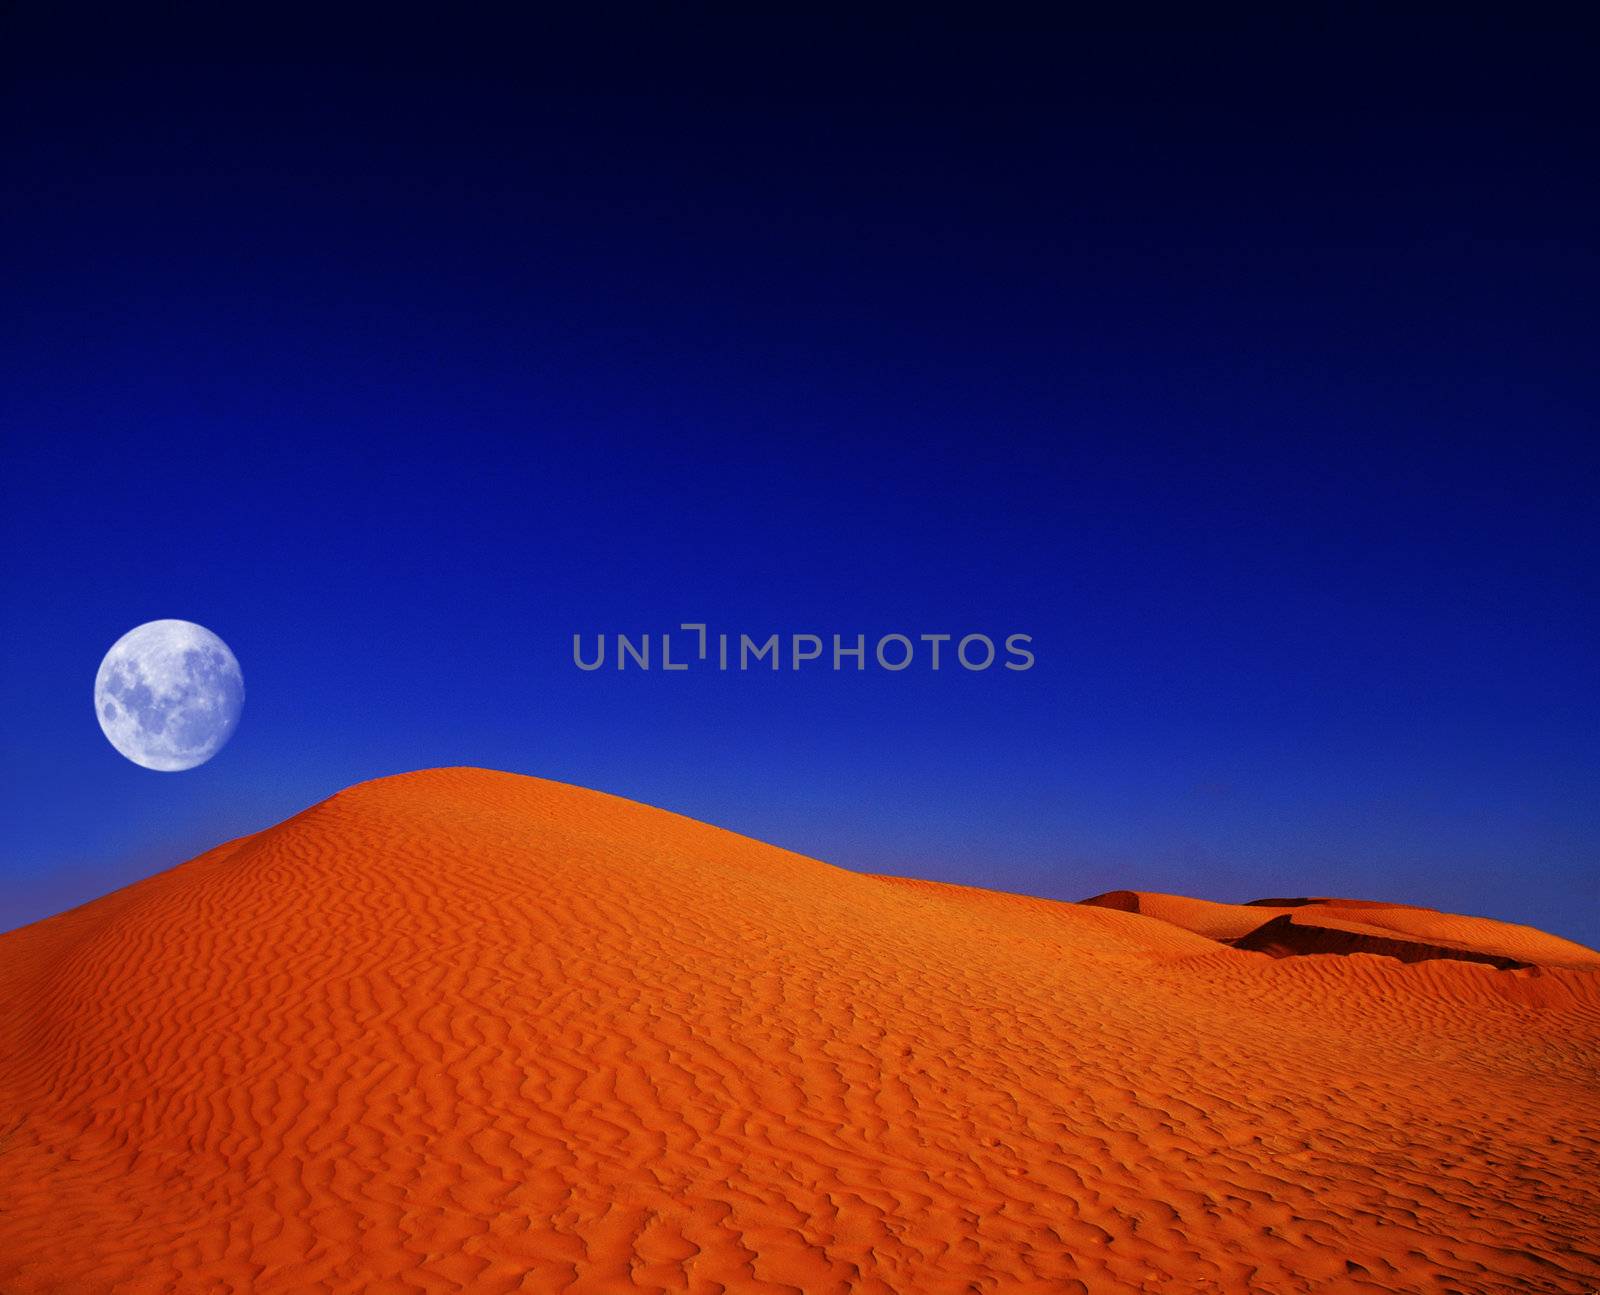 african desert at night by photochecker